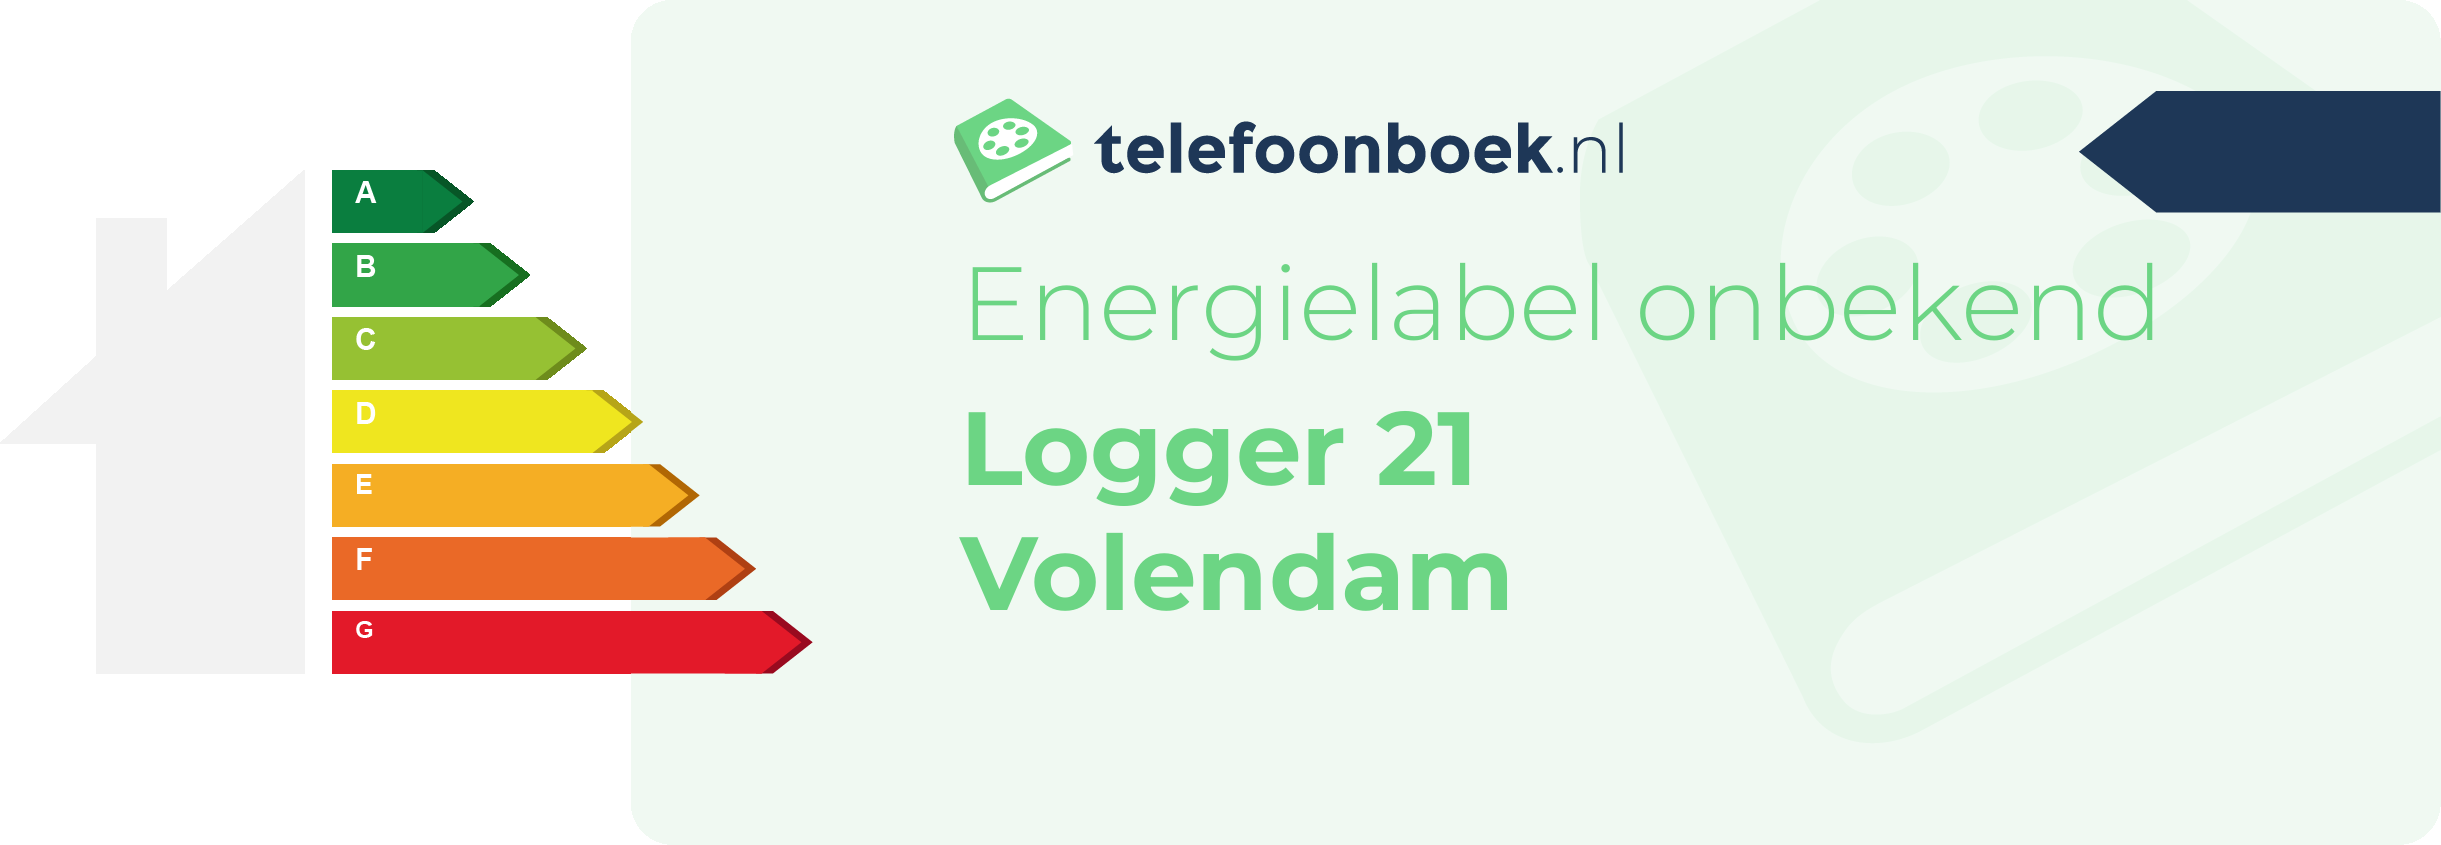 Energielabel Logger 21 Volendam